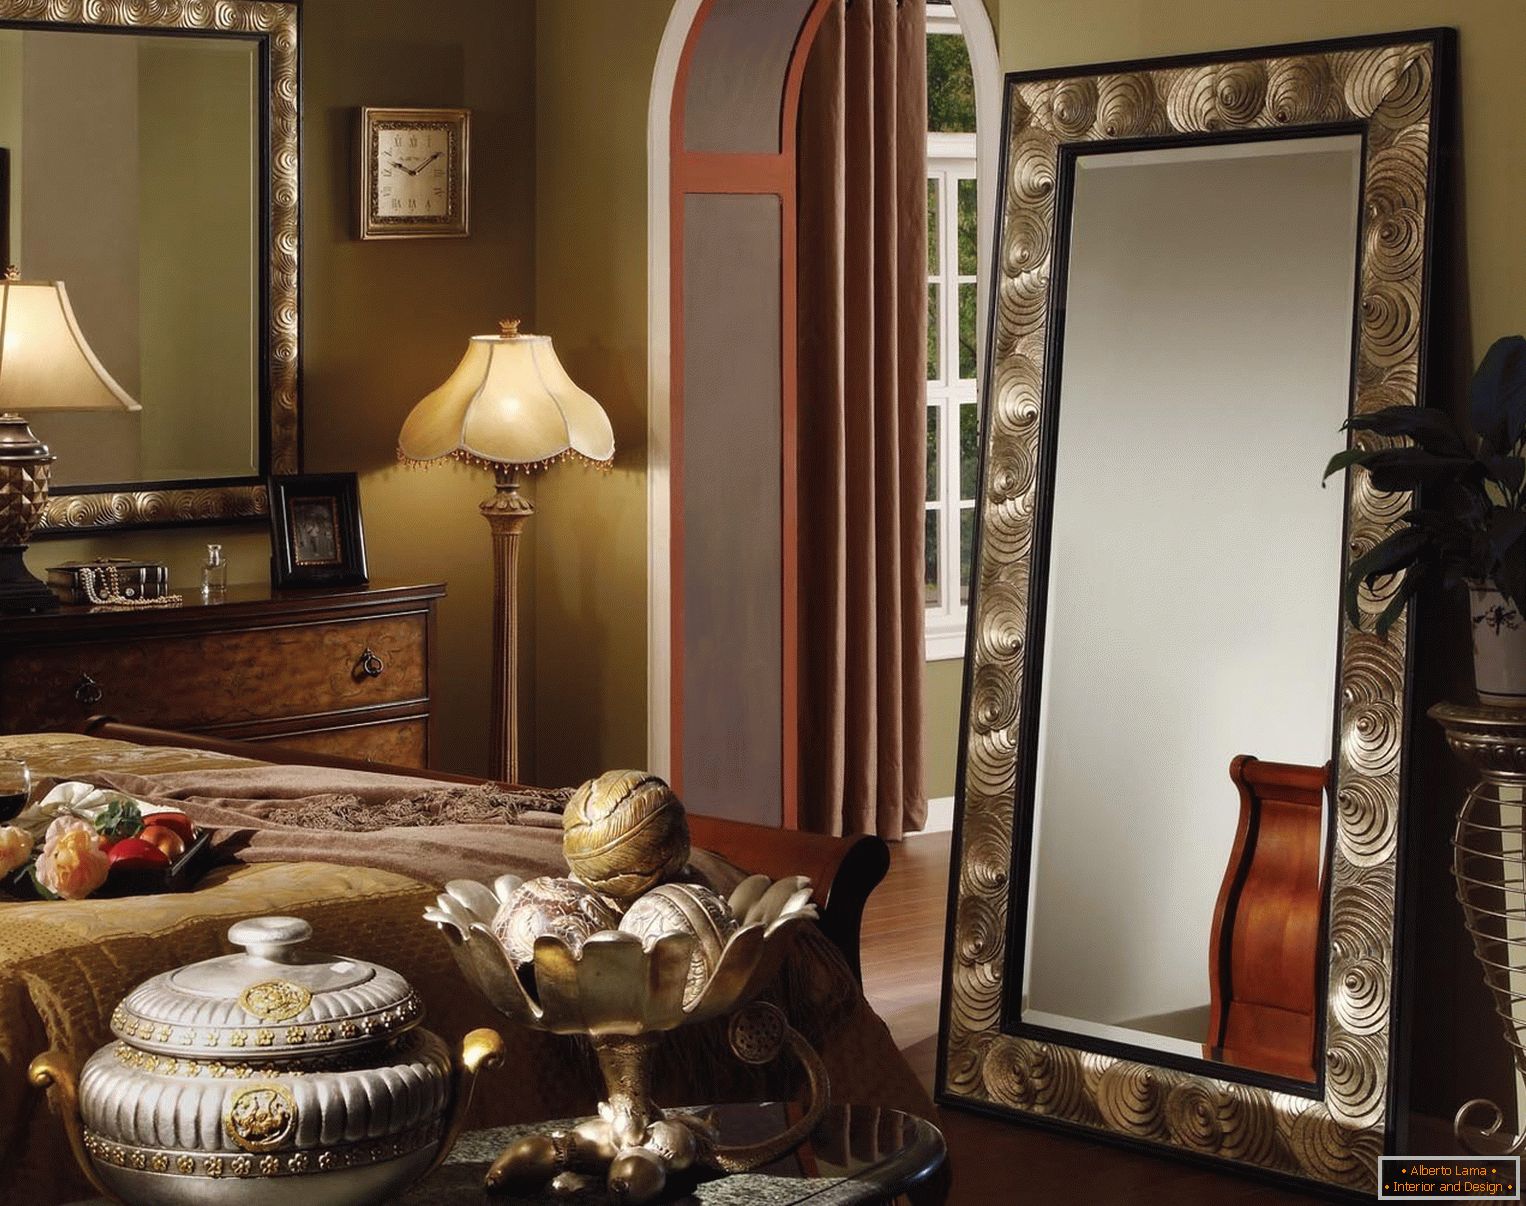 Interiorul elegant cu oglinzi